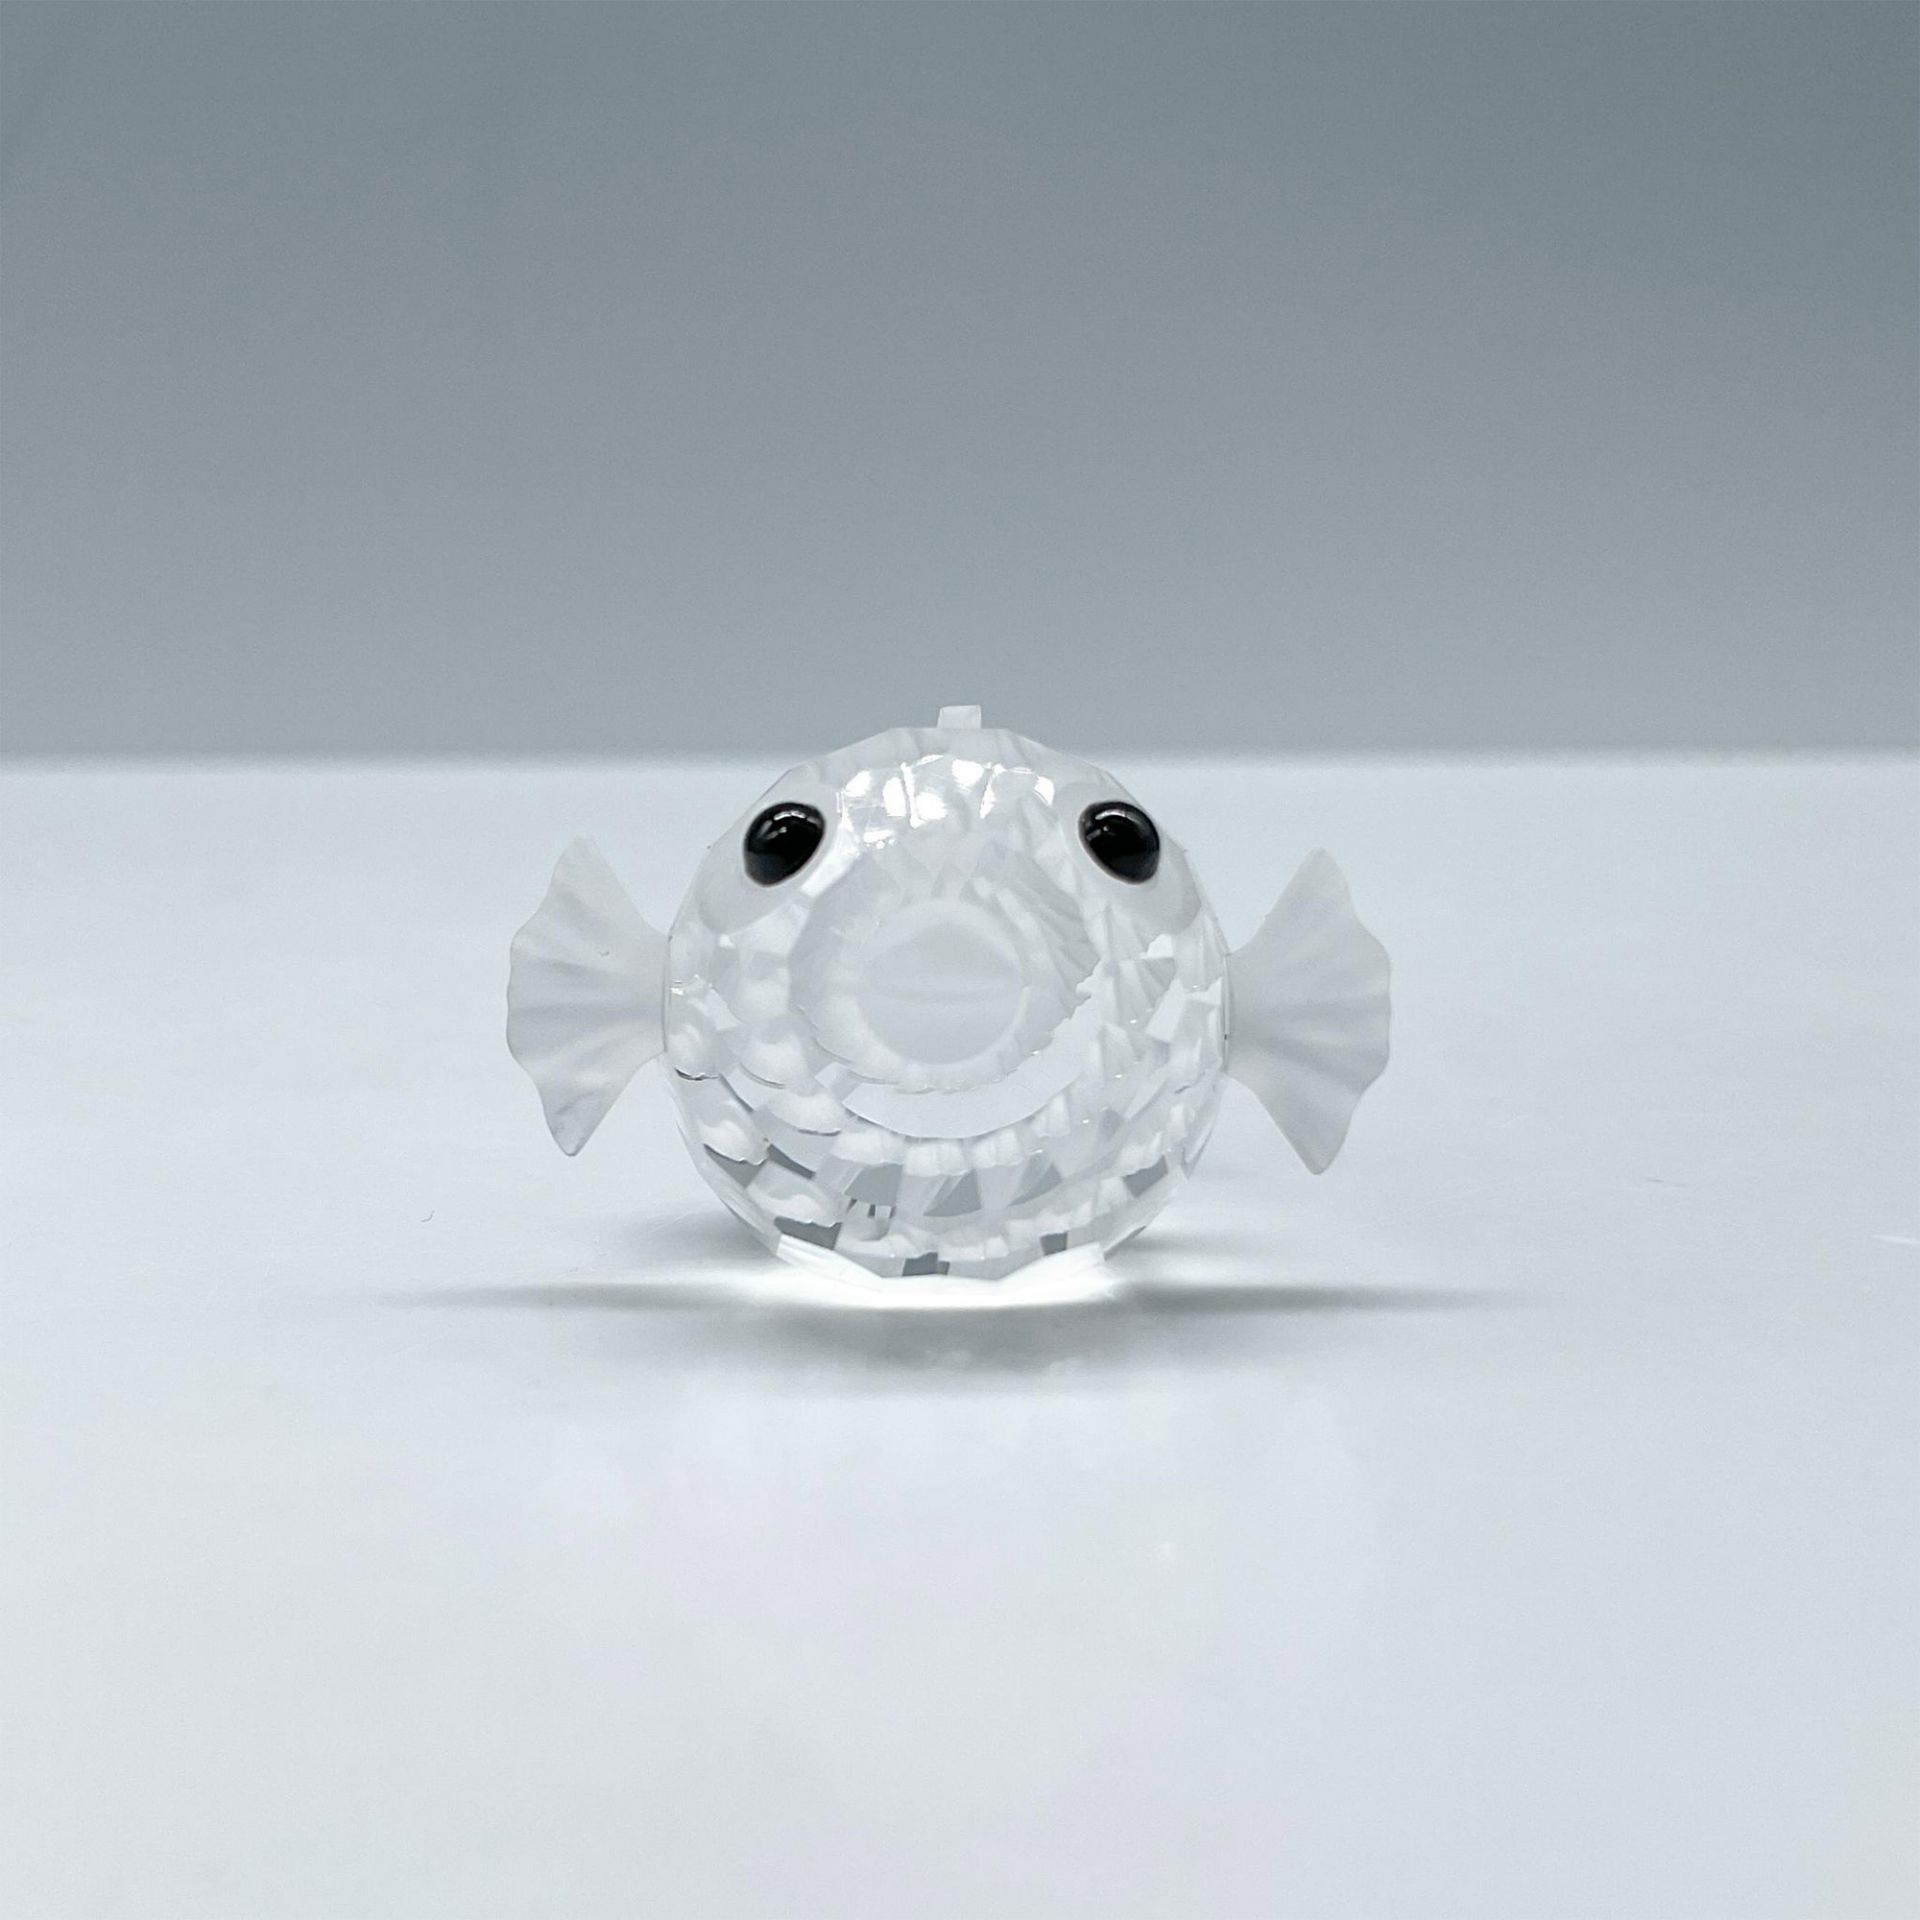 Swarovski Crystal Figurine, Blowfish